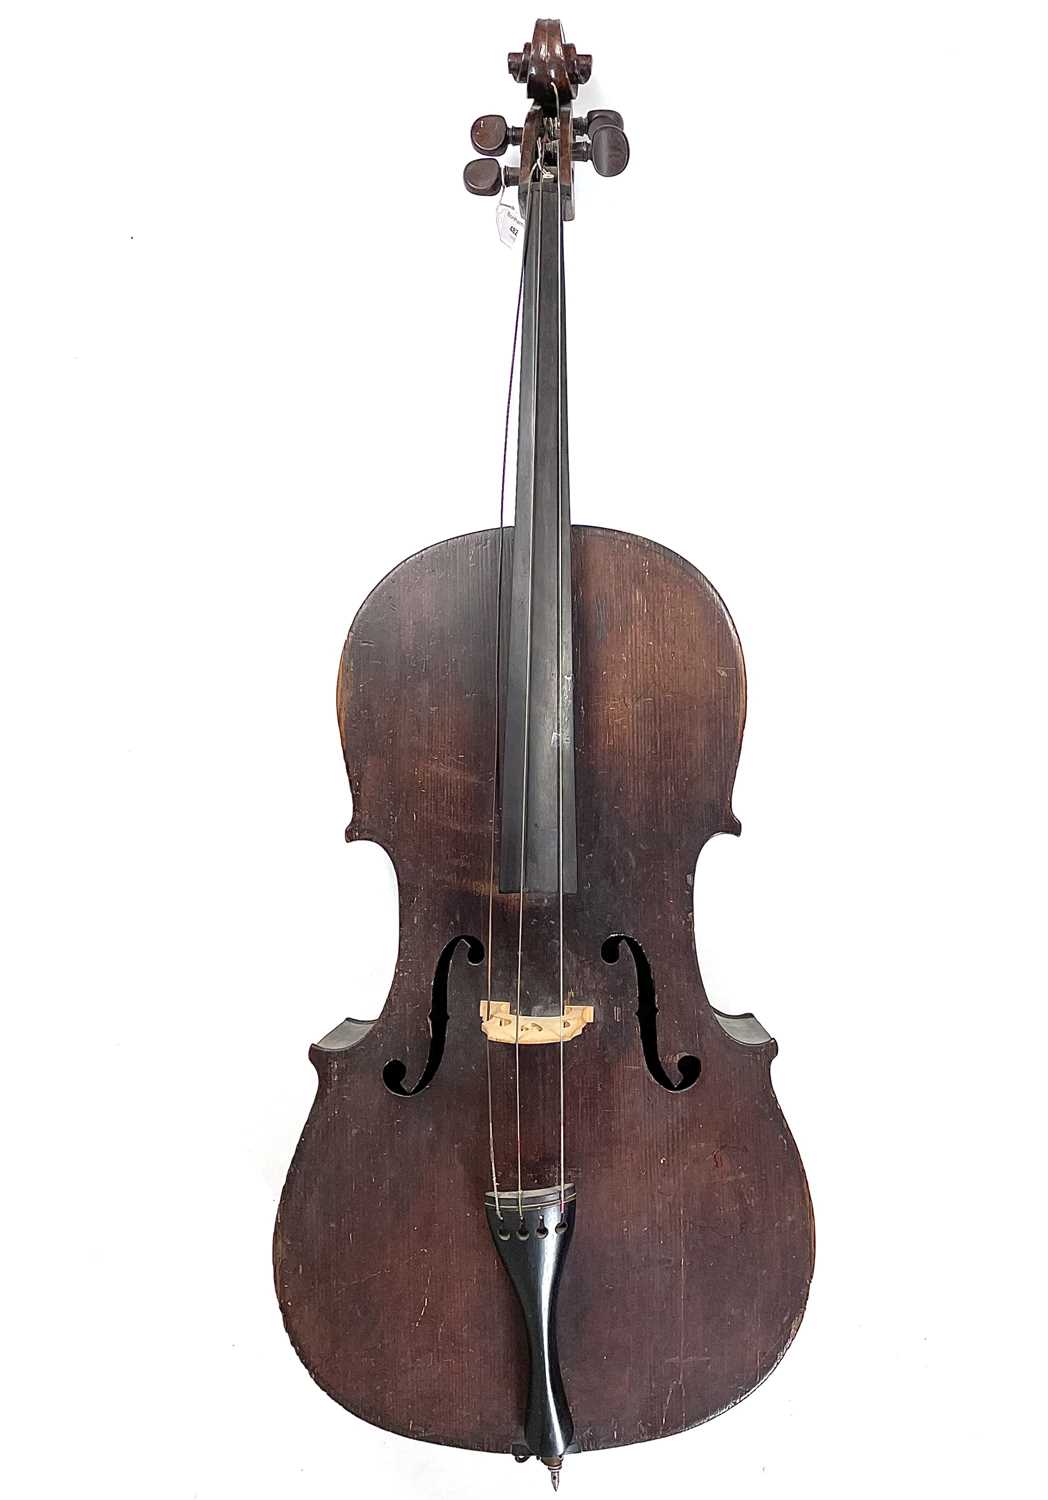 A 19th century Saxon cello